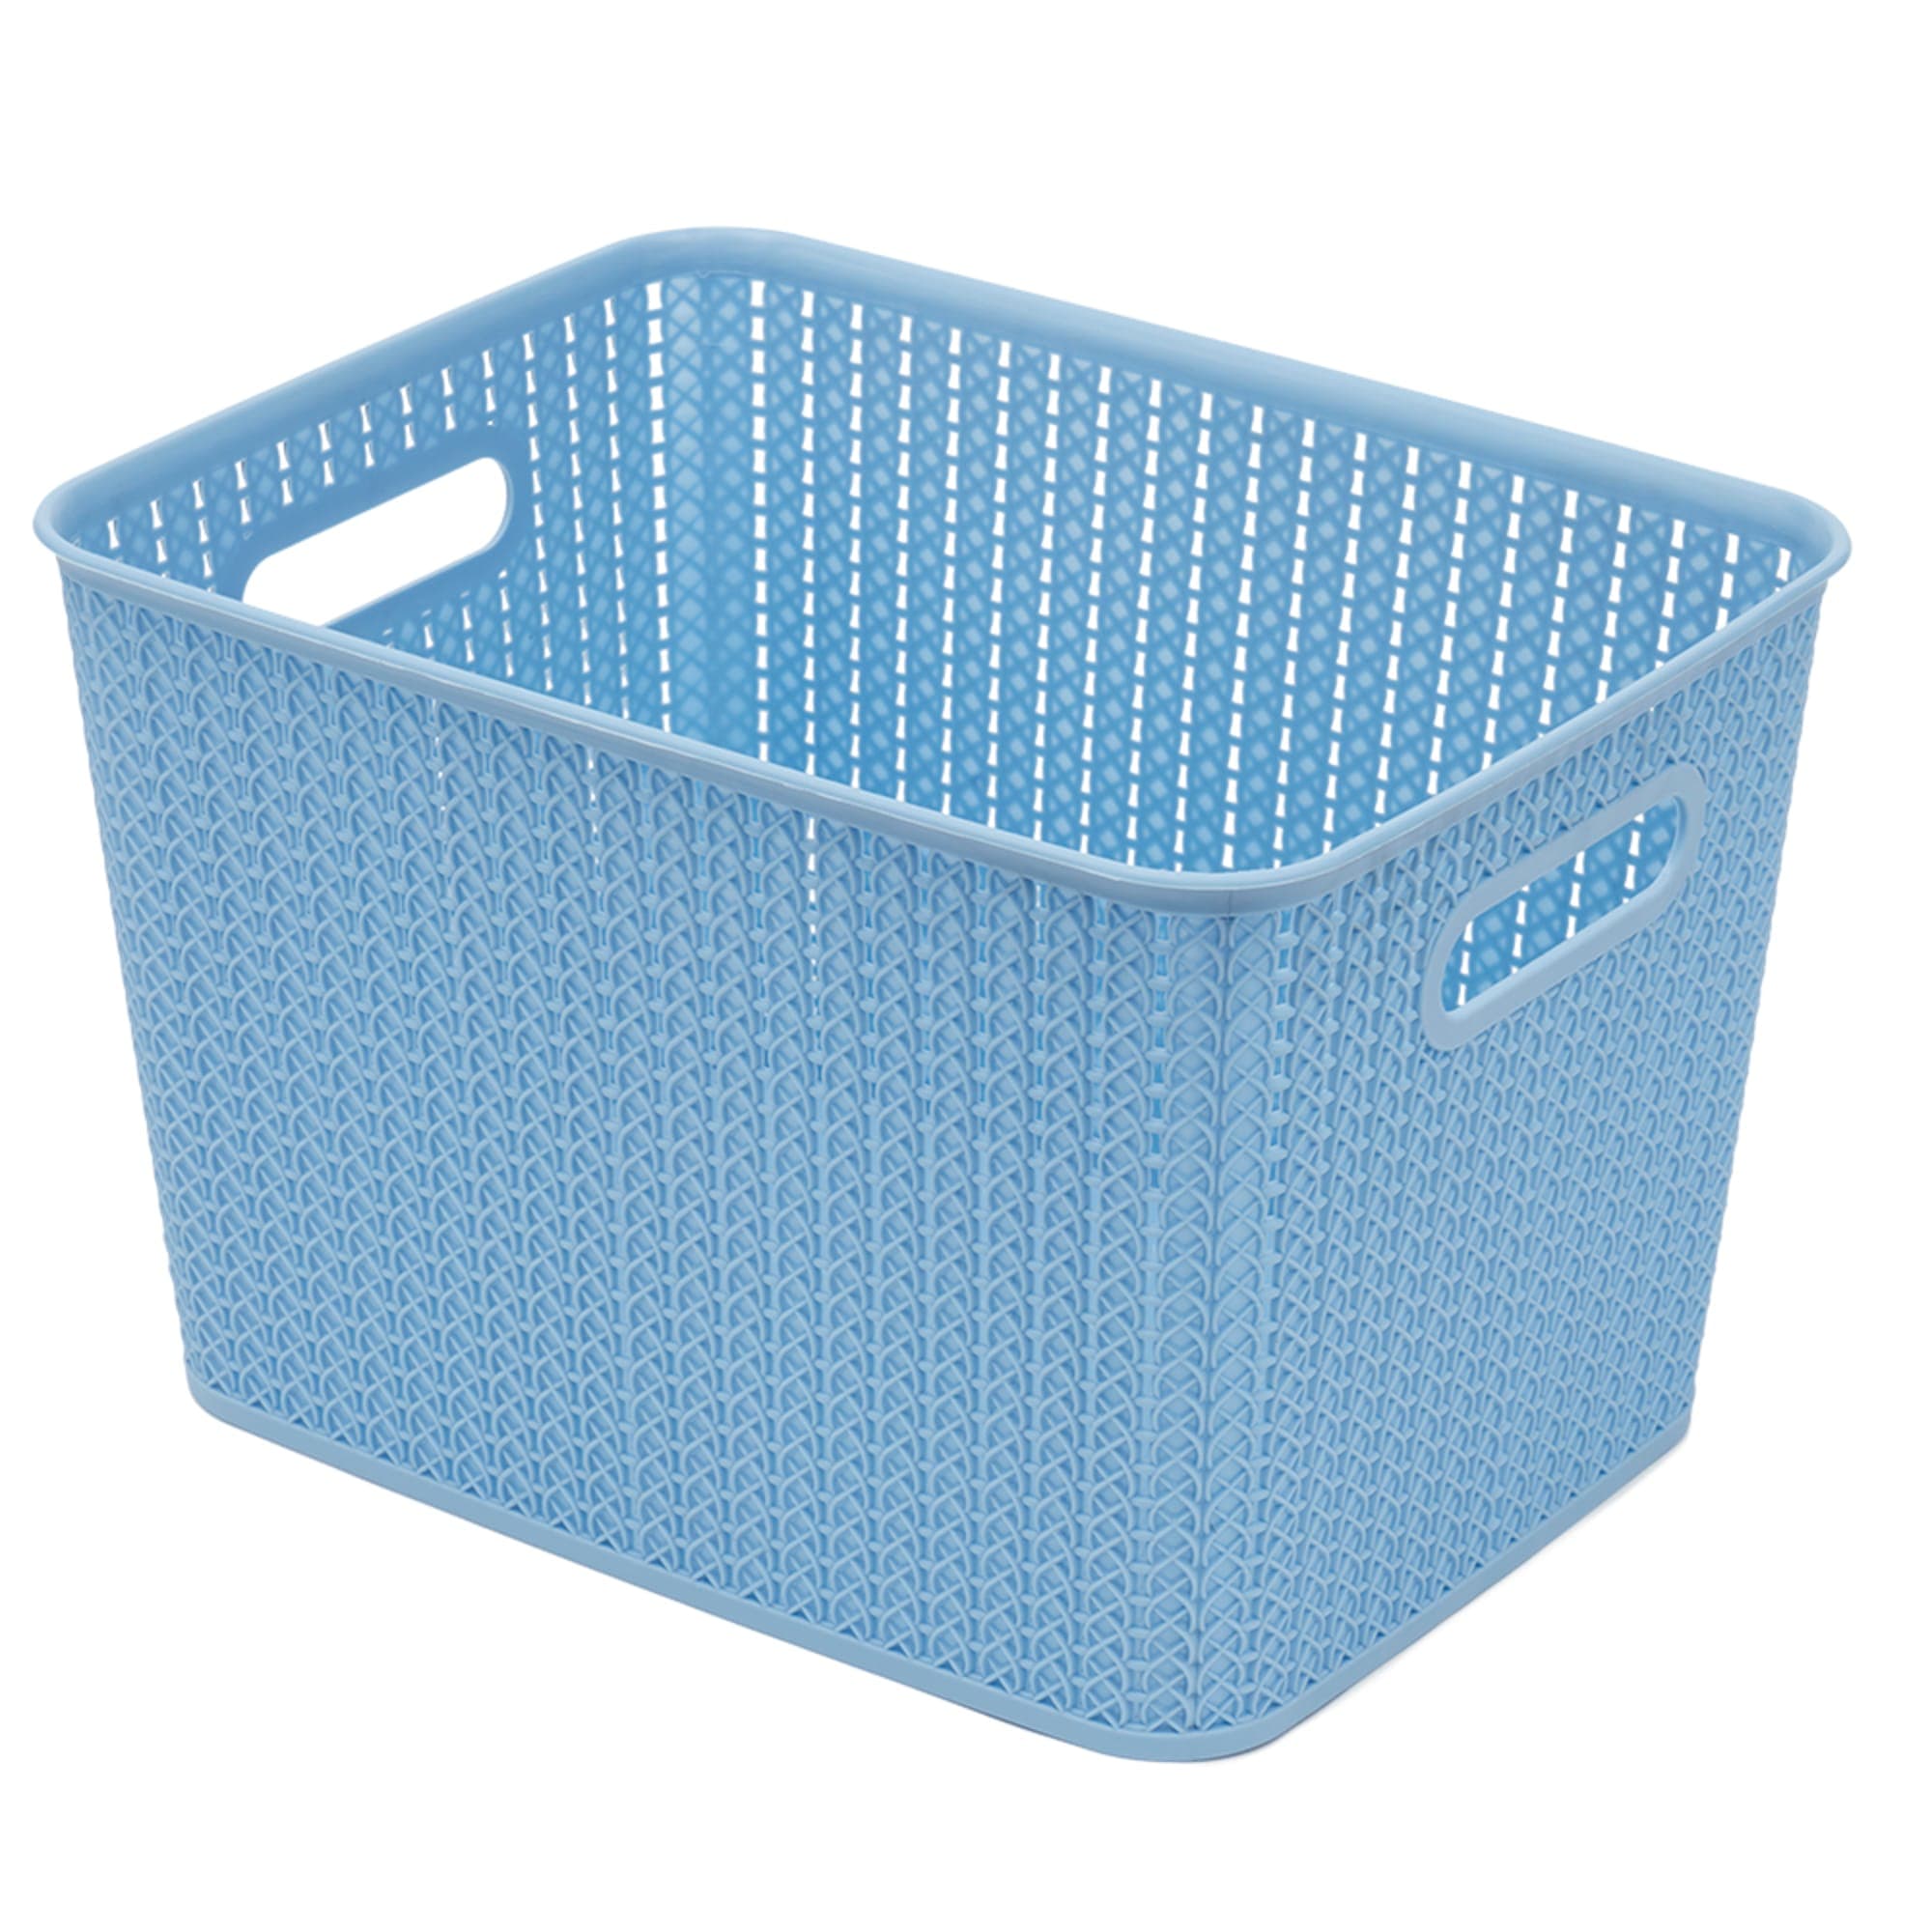 Home Basics 20 Liter Plastic Basket With Handles, Blue $6.00 EACH, CASE PACK OF 4